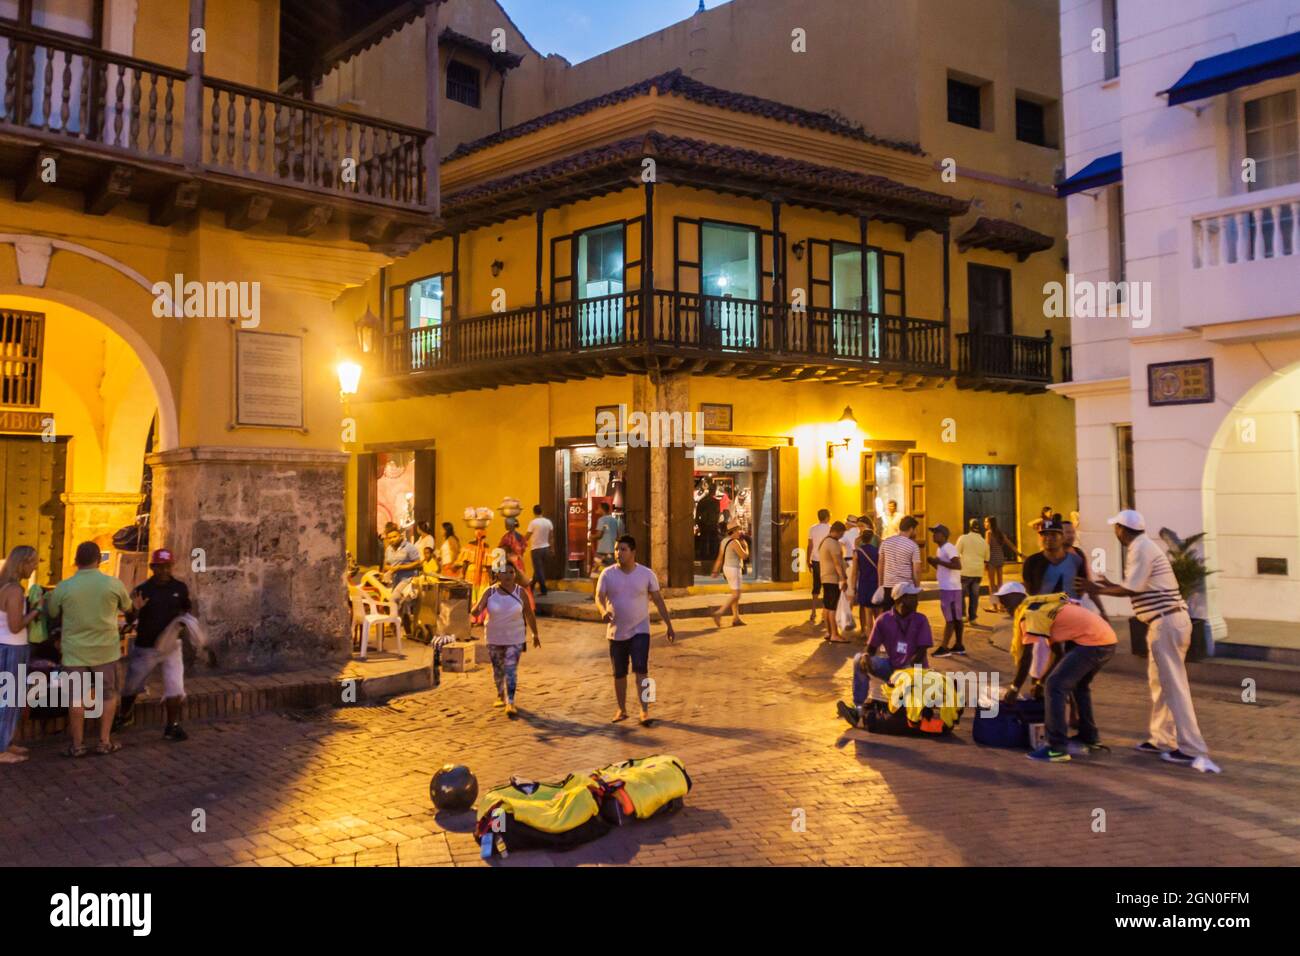 CARTAGENA DE INDIAS, COLOMBIA - AUG 27, 2015: People walk at the Plaza de los Coches in Cartagena during evening. Stock Photo